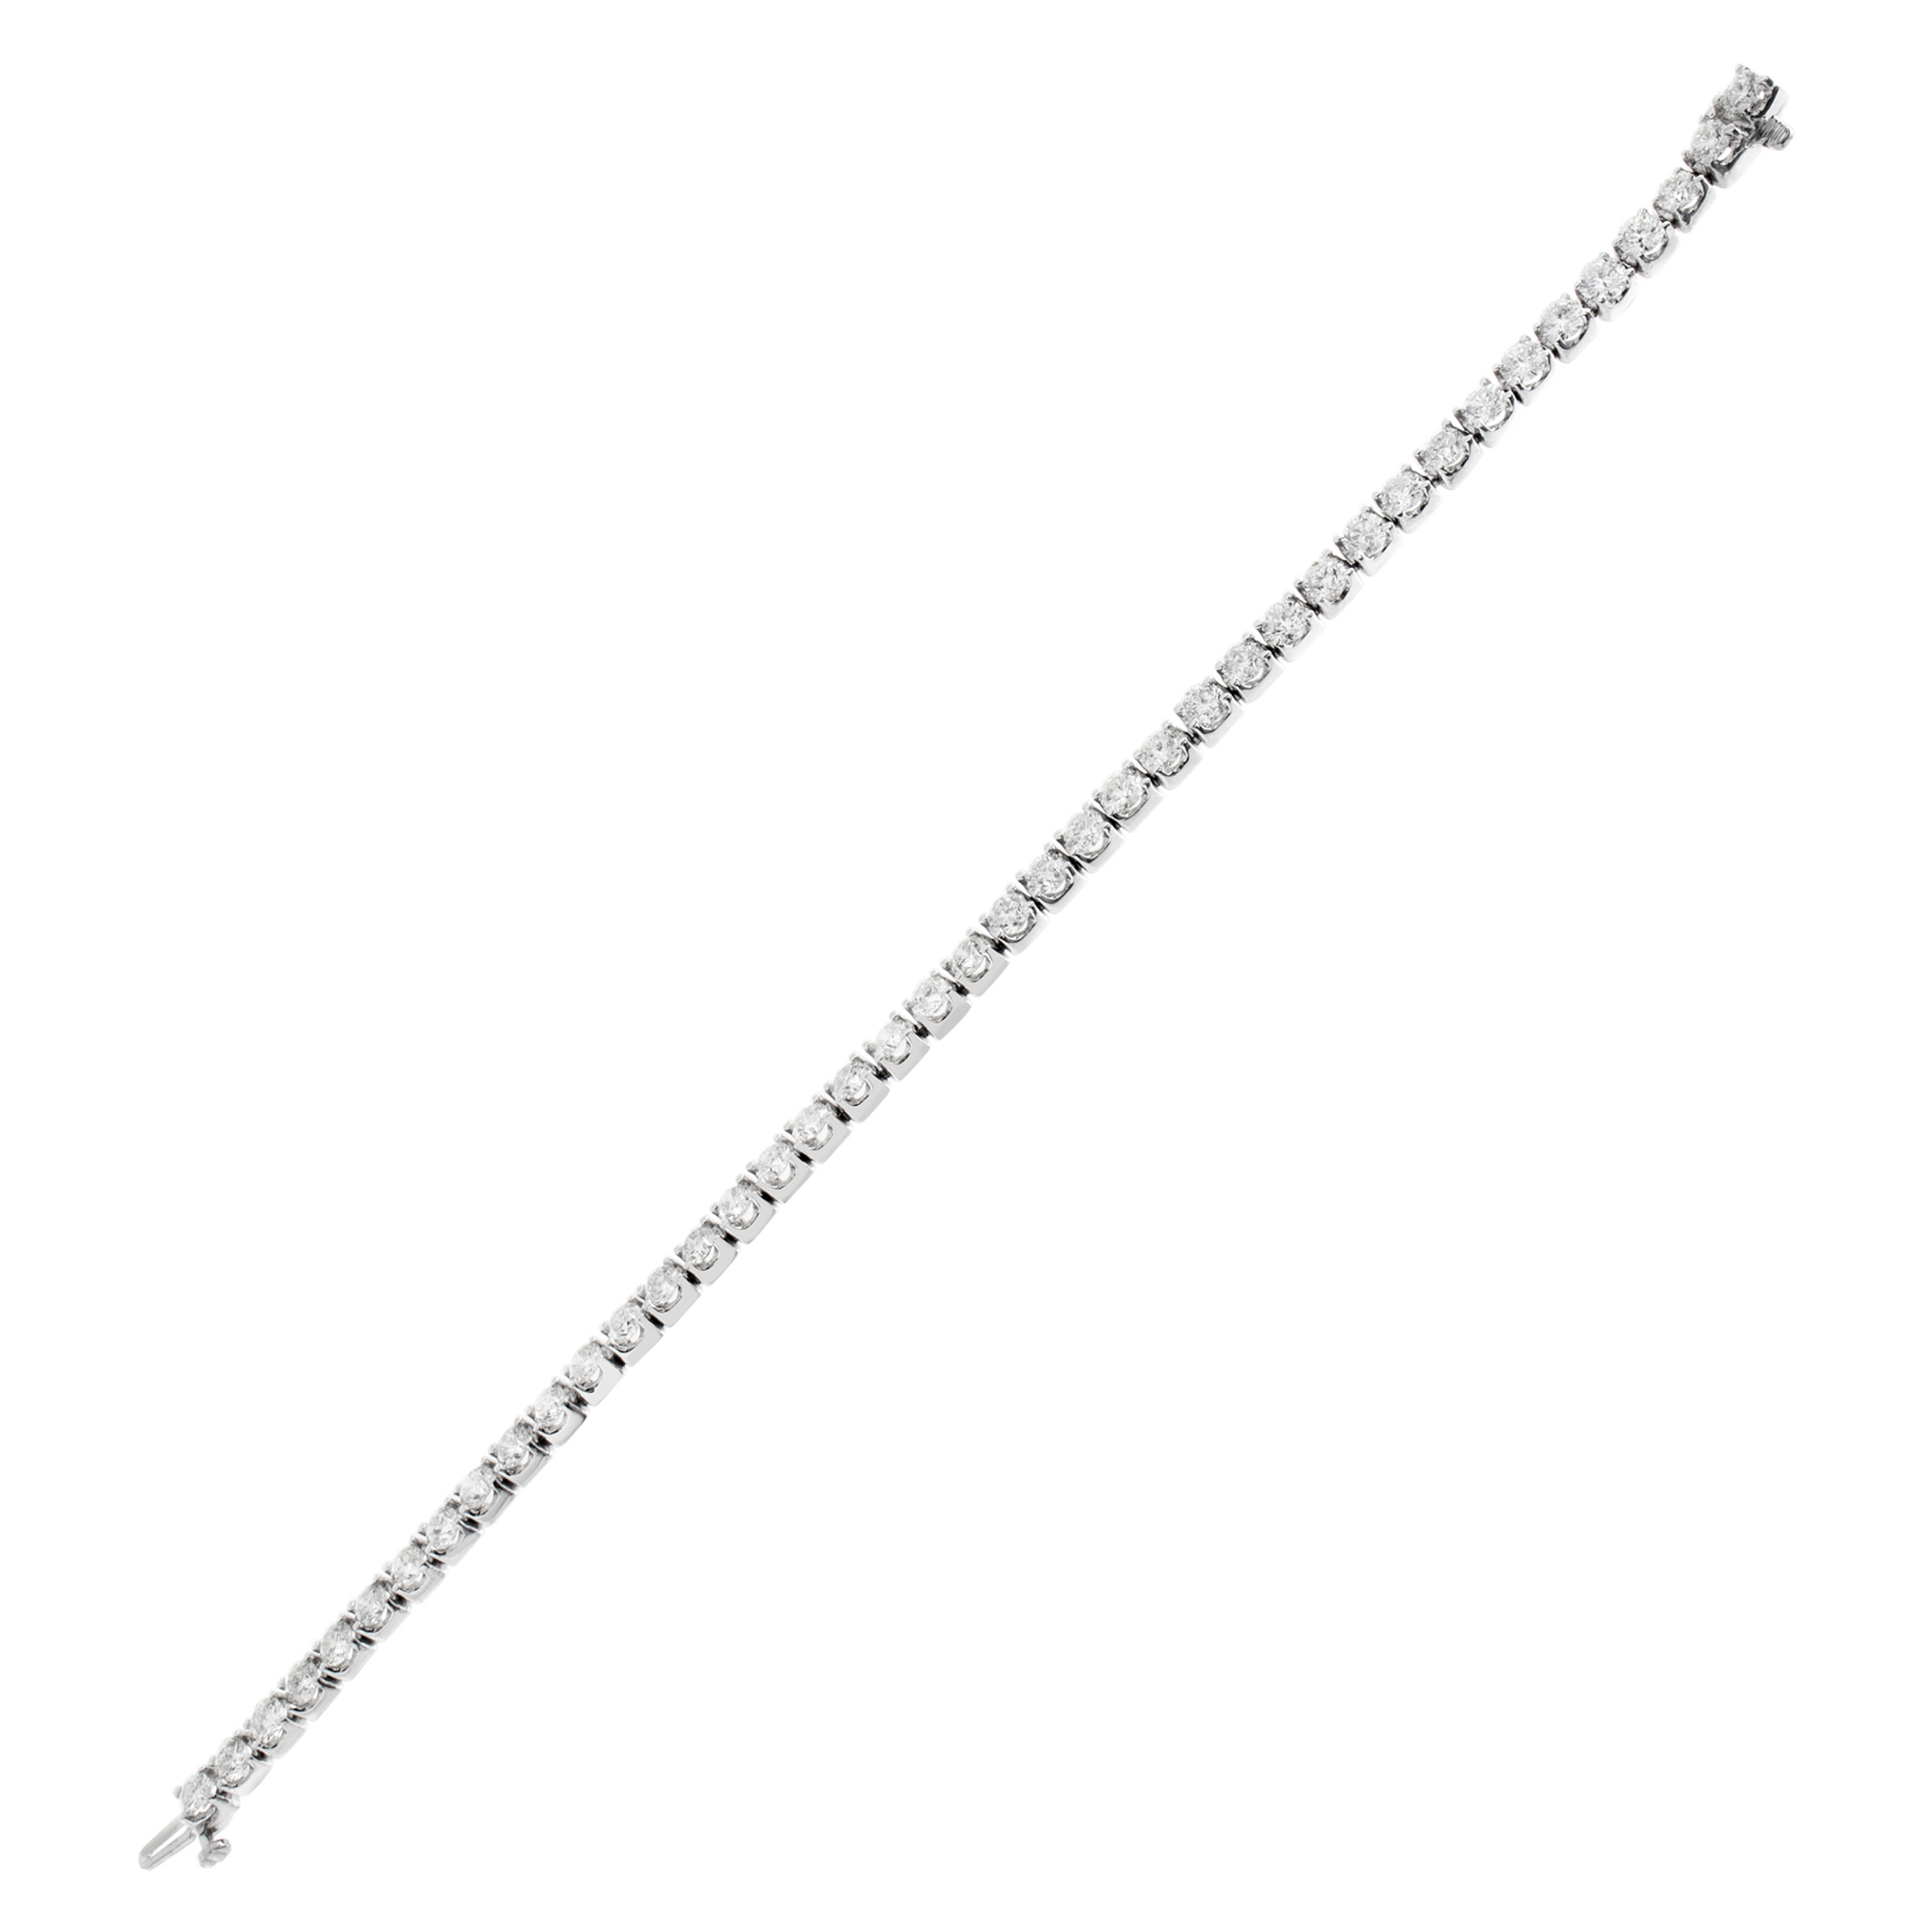 Sparkling line diamond bracelet with 8.09 carat full cut round diamonds set in 14K white gold image 5